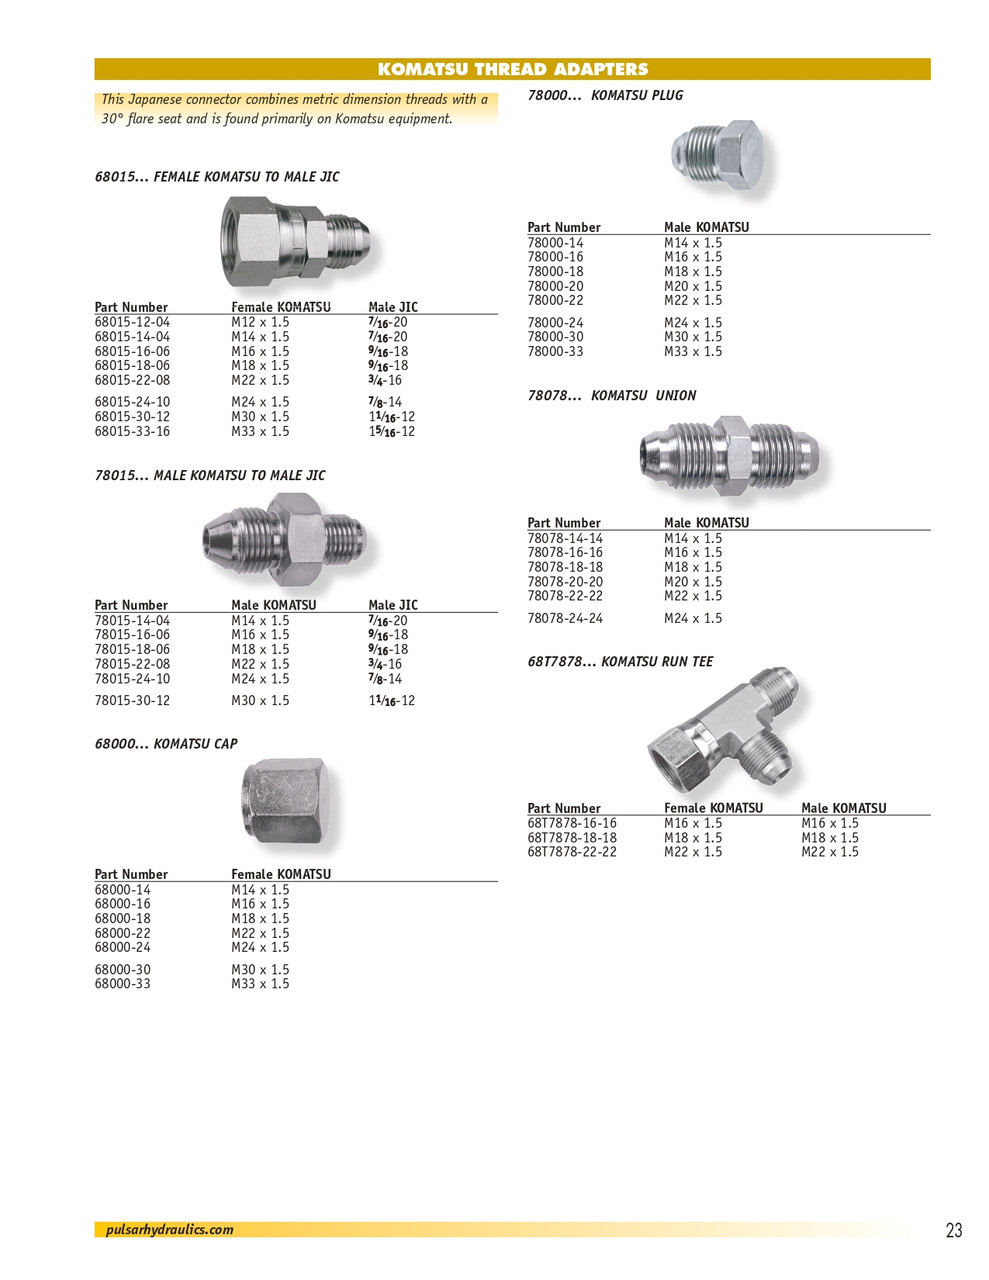 M30-1.5 Steel Komatsu Plug   78000-30